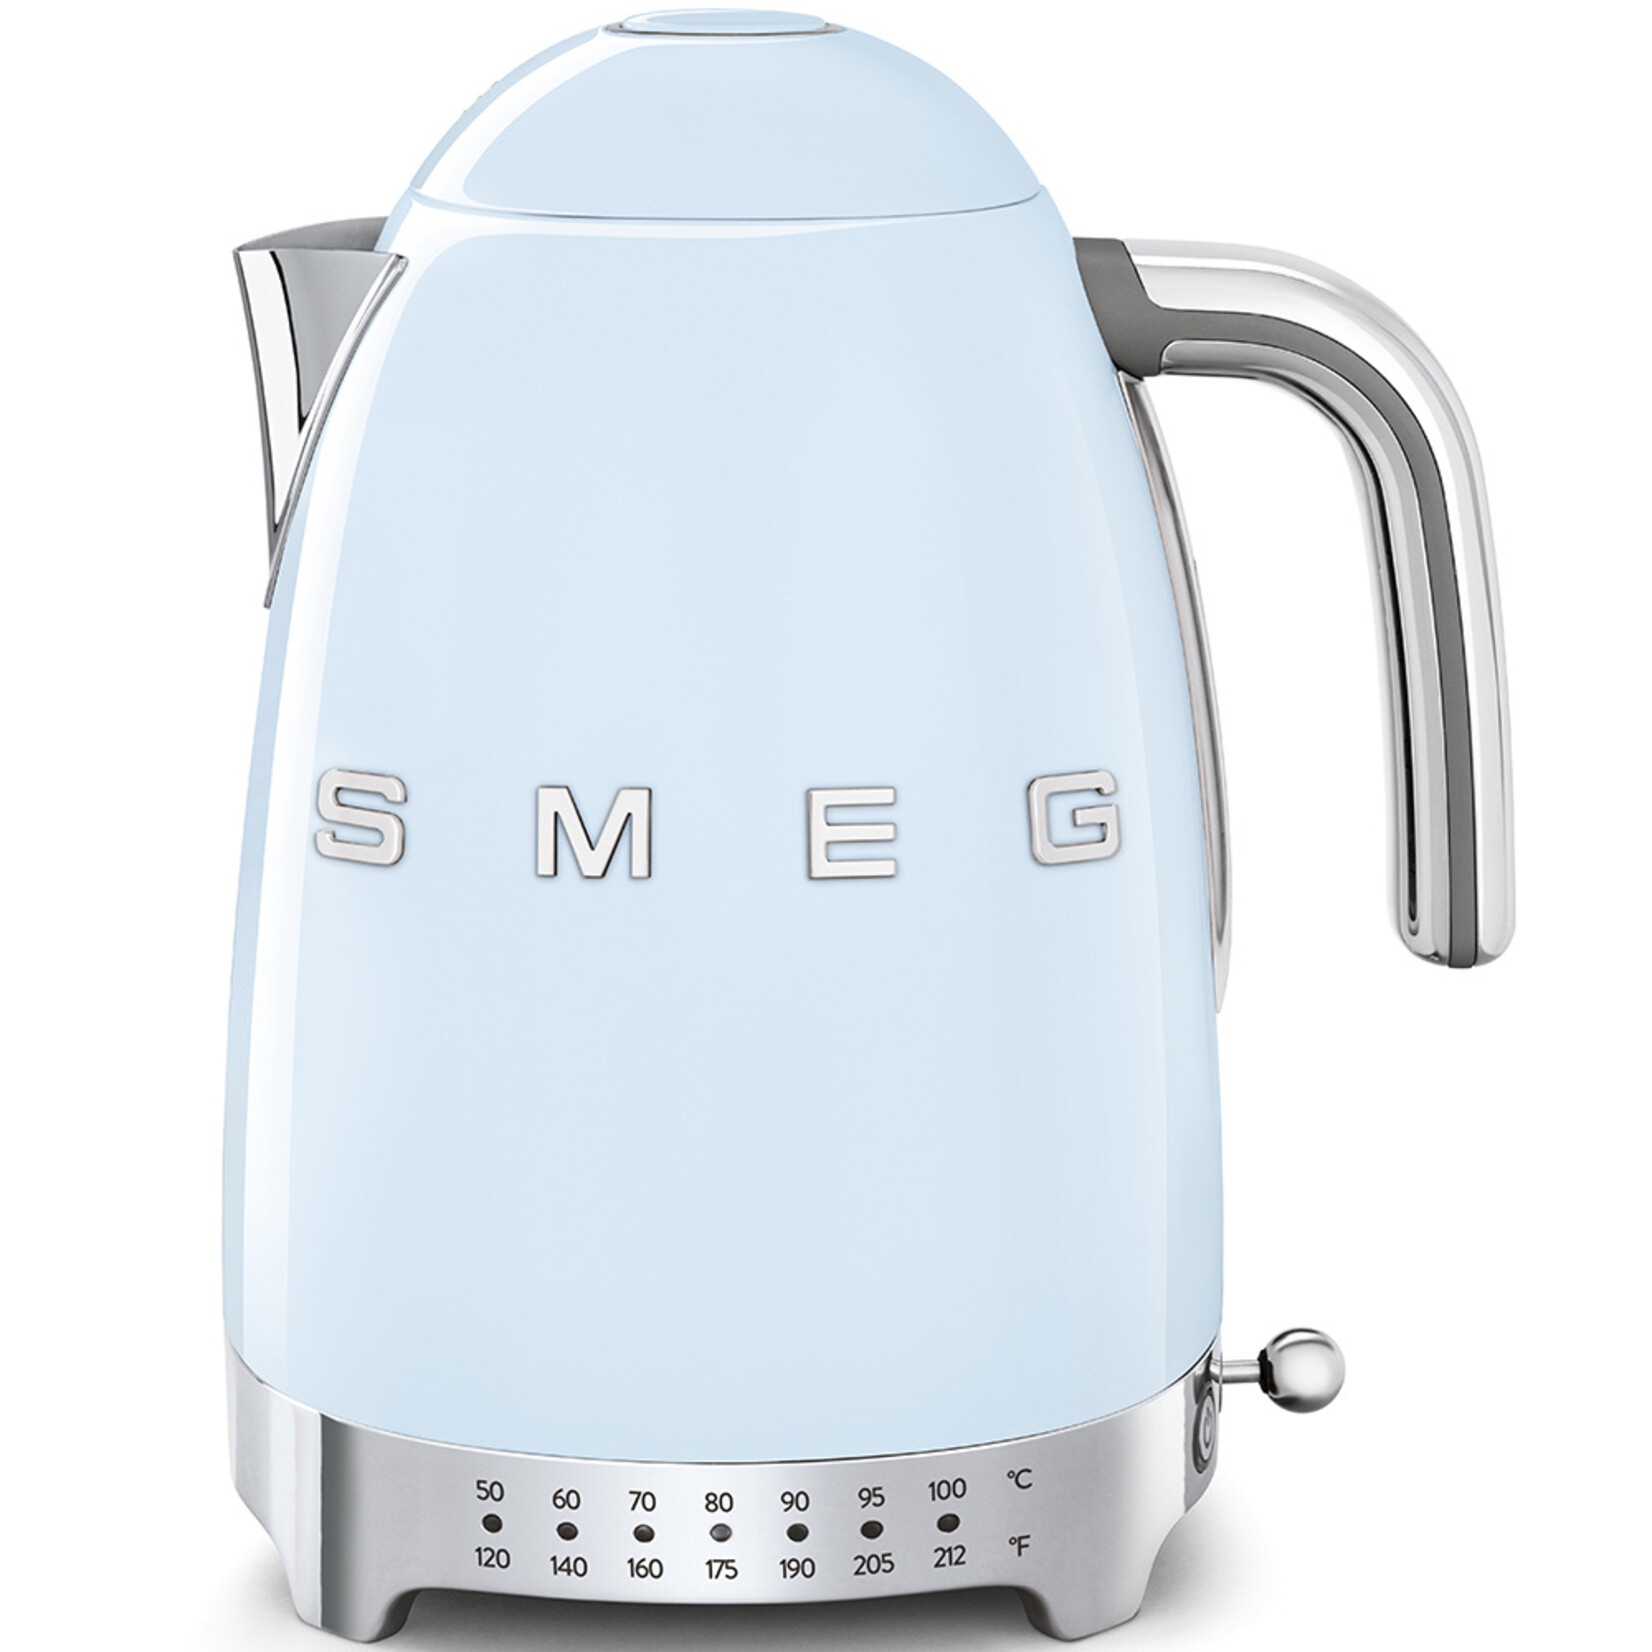 SMEG SMEG 50's Retro Style Aesthetic Variable 7 Cup Temperature Kettle